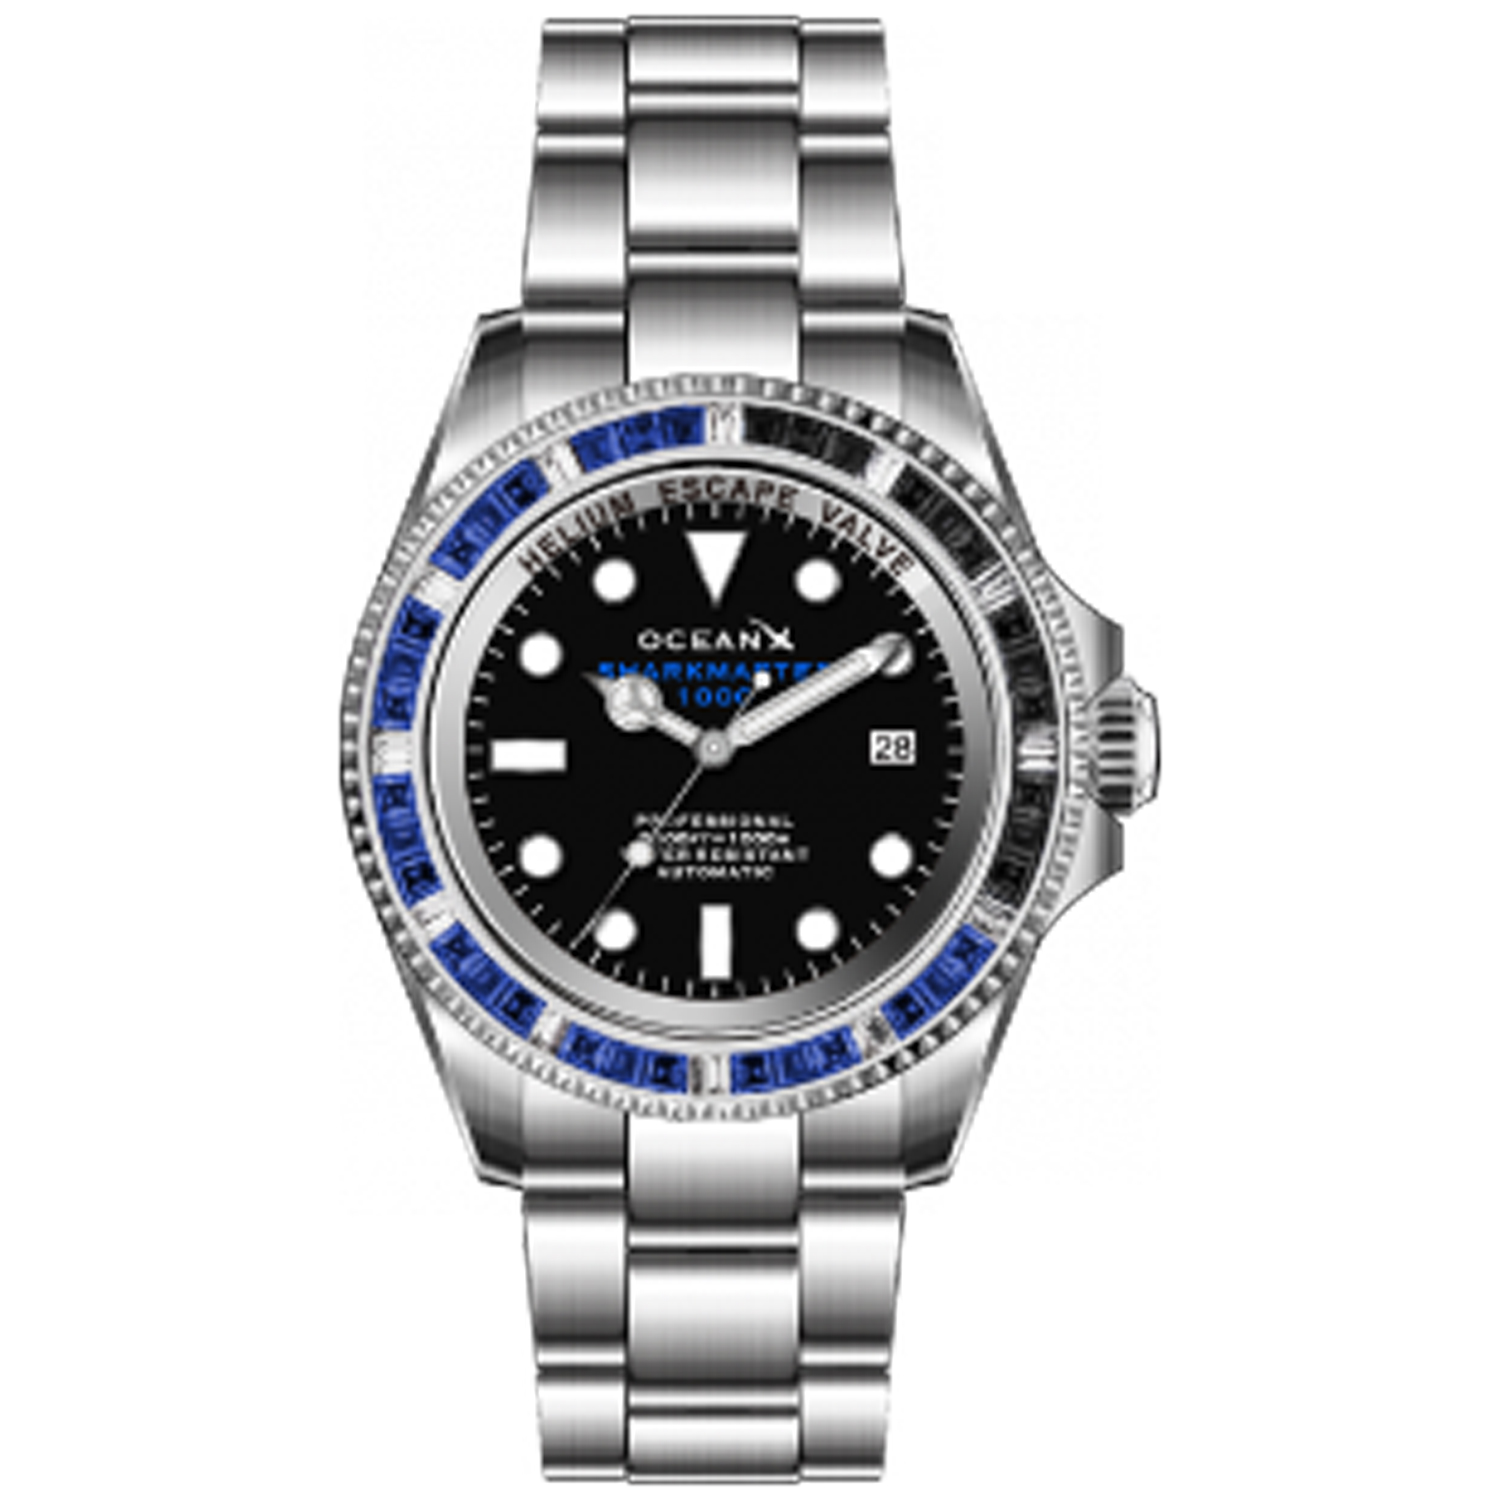 OceanX Sharkmaster 1000 Men's Diver Watch 44mm Baguette Crystal Bezel - Limited Edition SMS1044